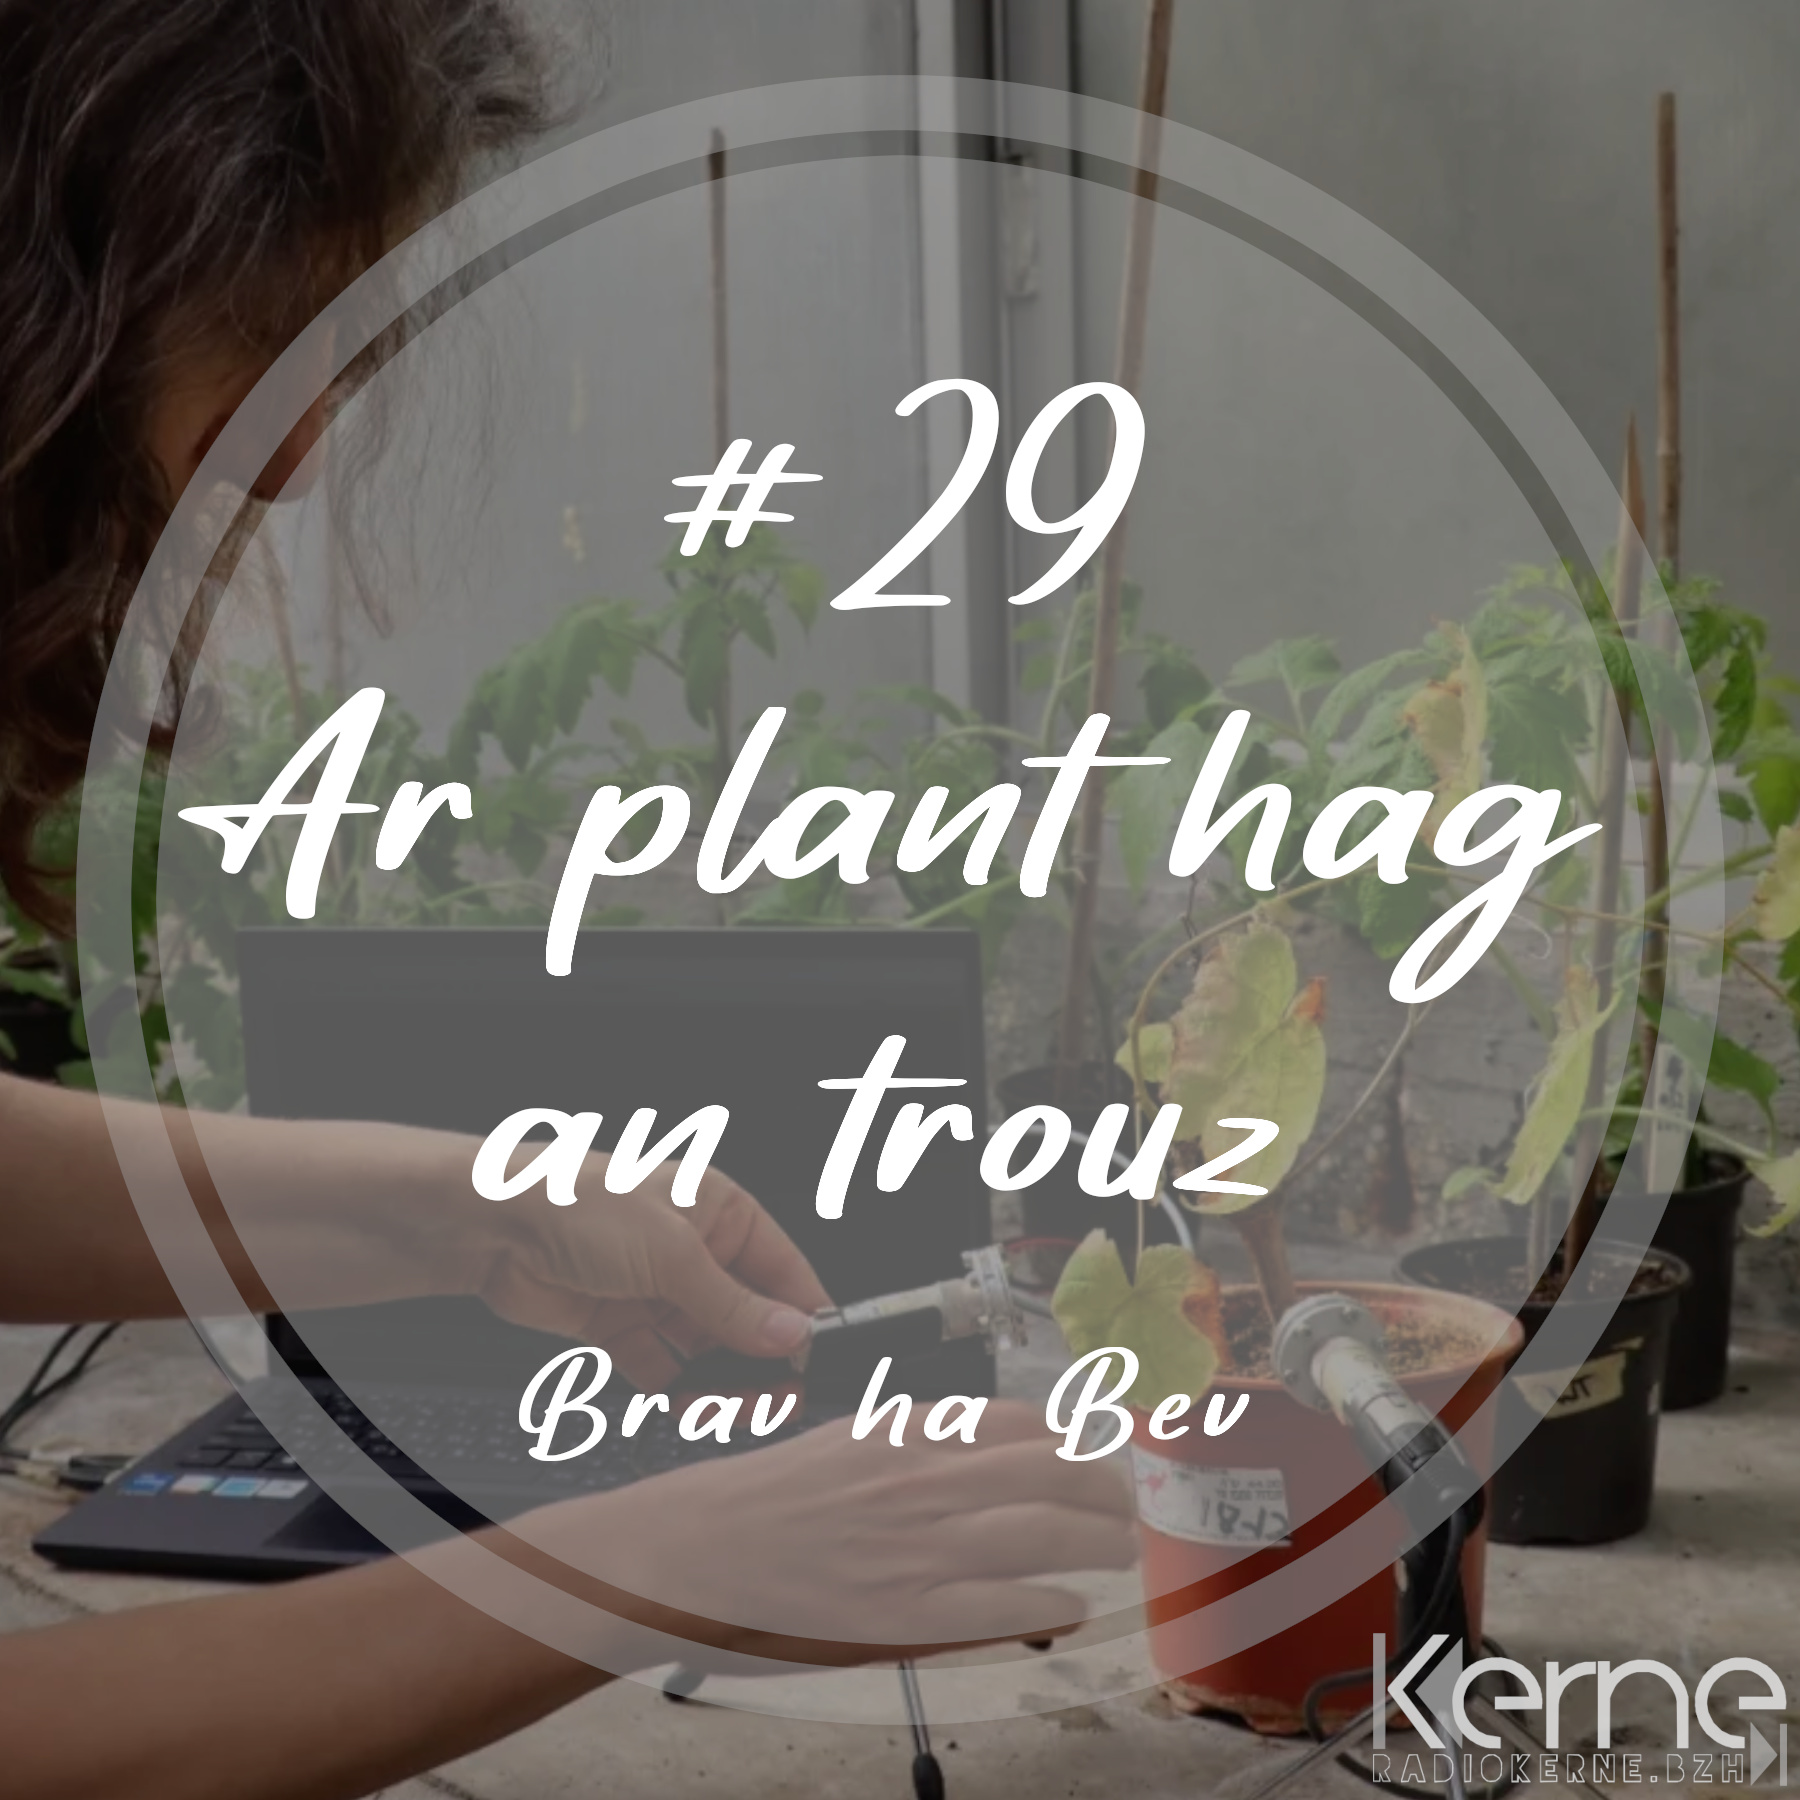 #29 Ar plant hag an trouz